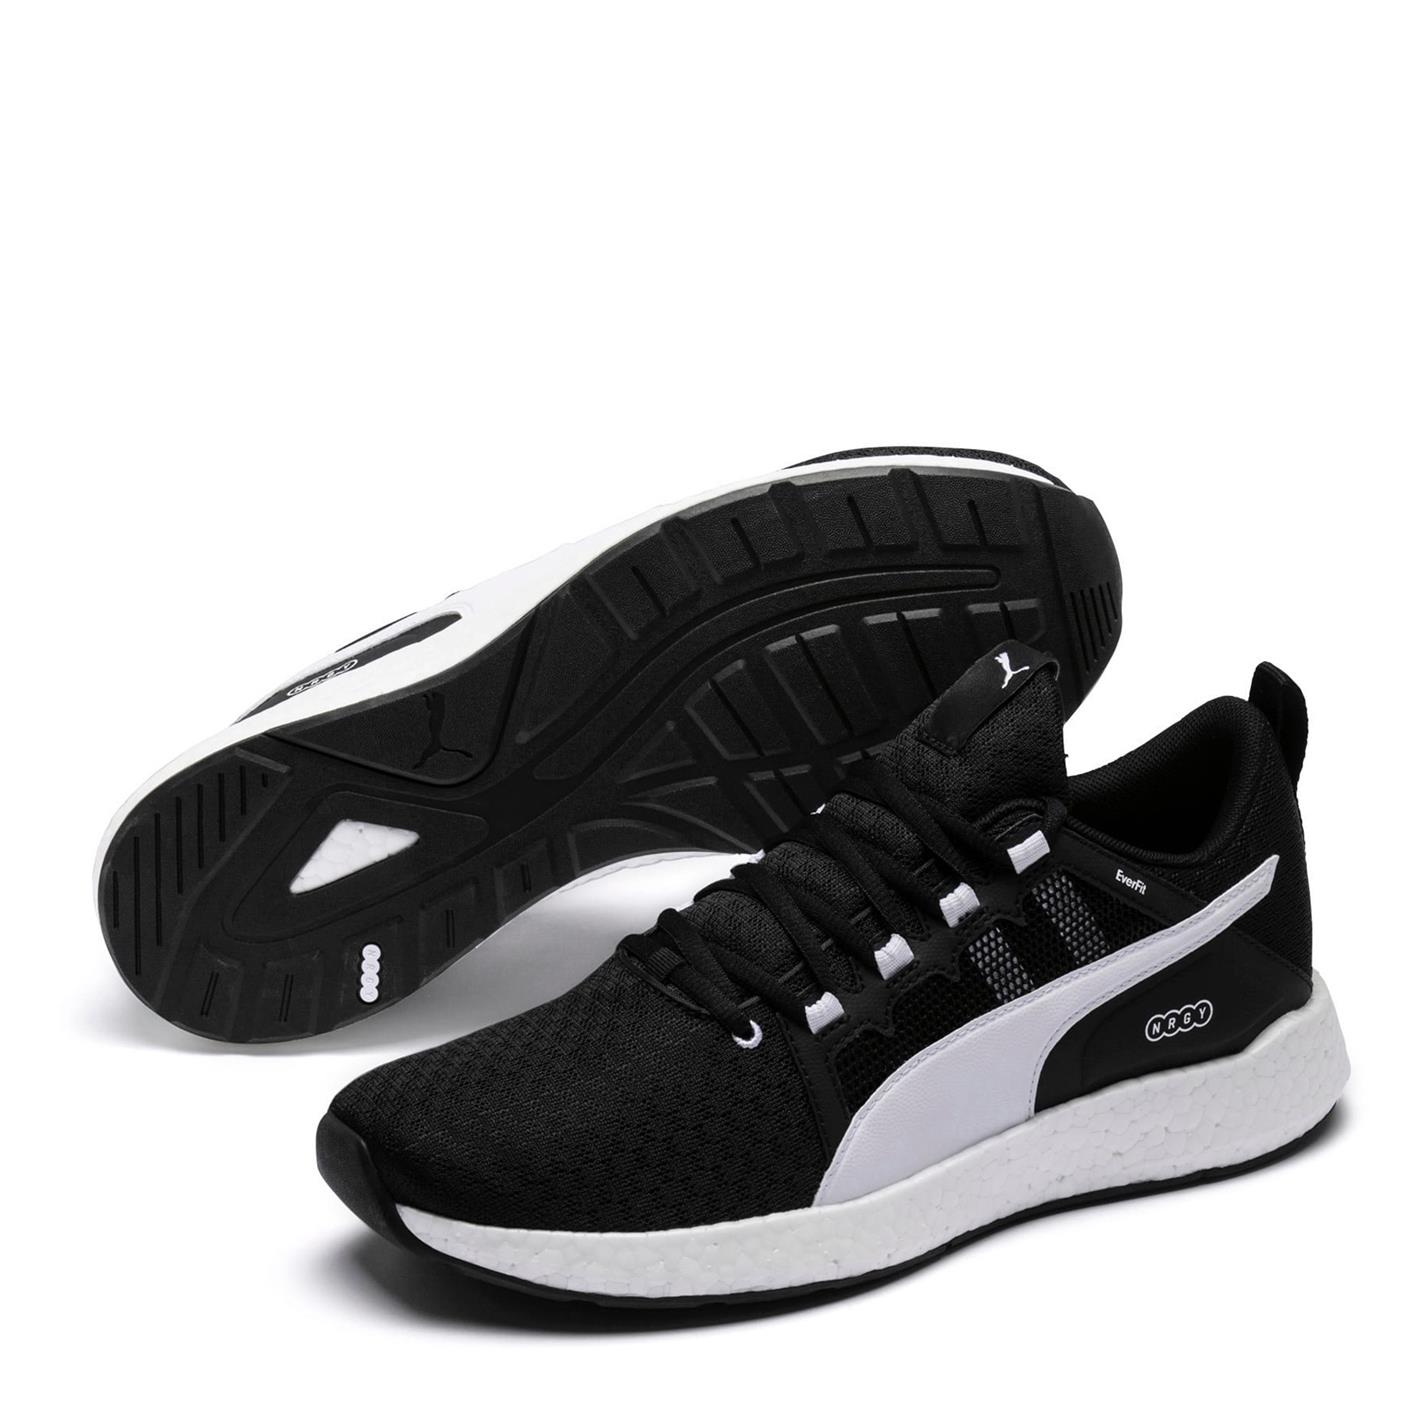 Adidasi sport Puma Neko Turbo pentru Barbati negru alb